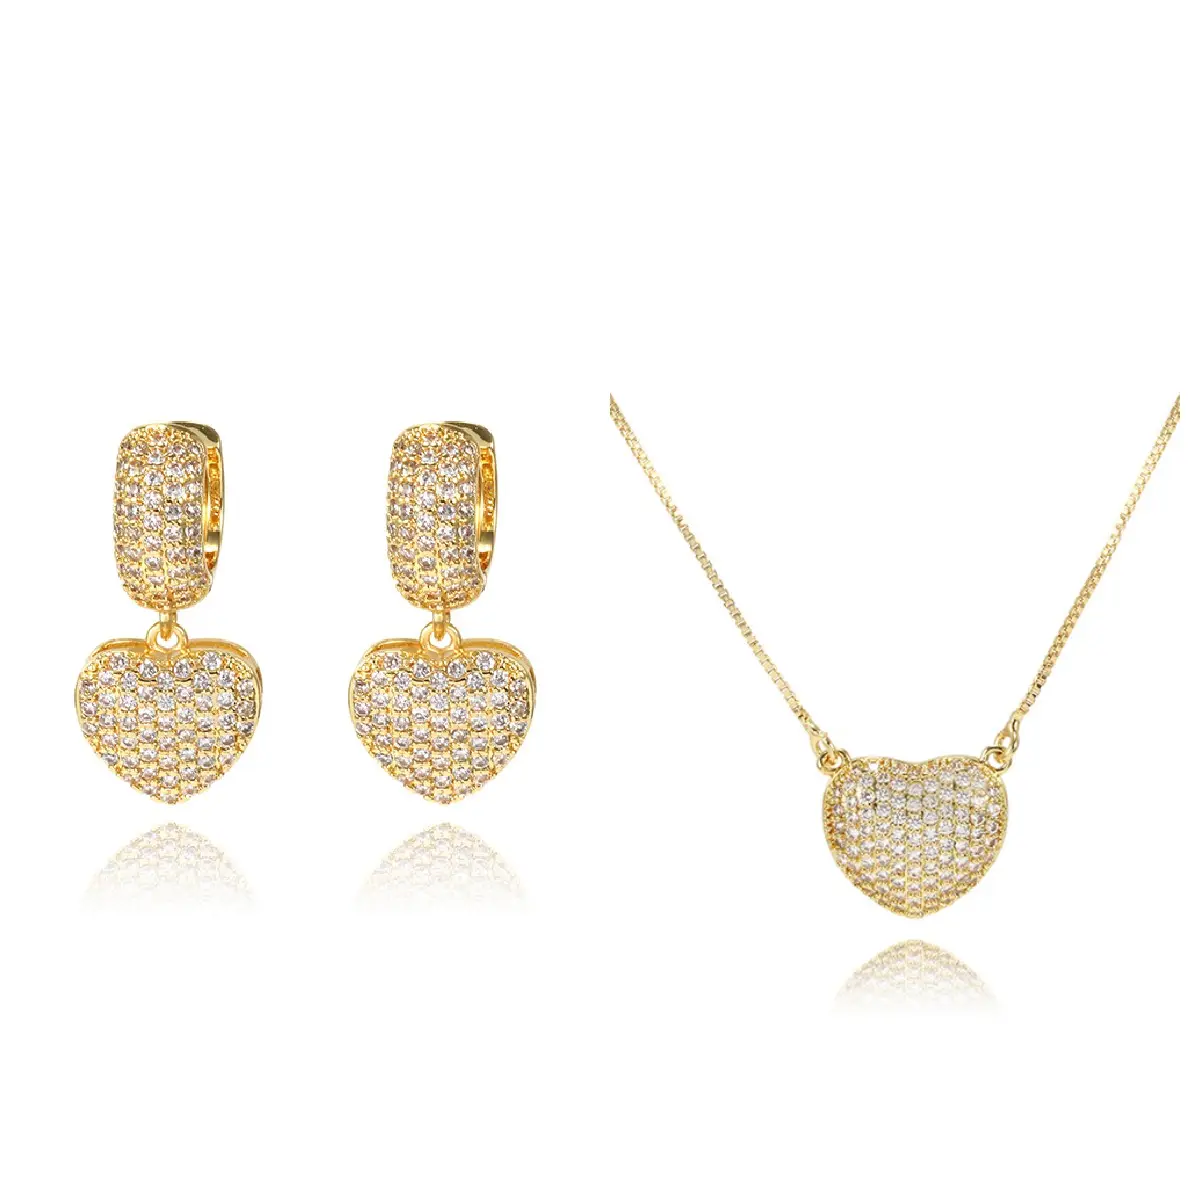 Semijoias folheado a ouro 18k micro pave cubic zirconia heart fashion jewelry sets